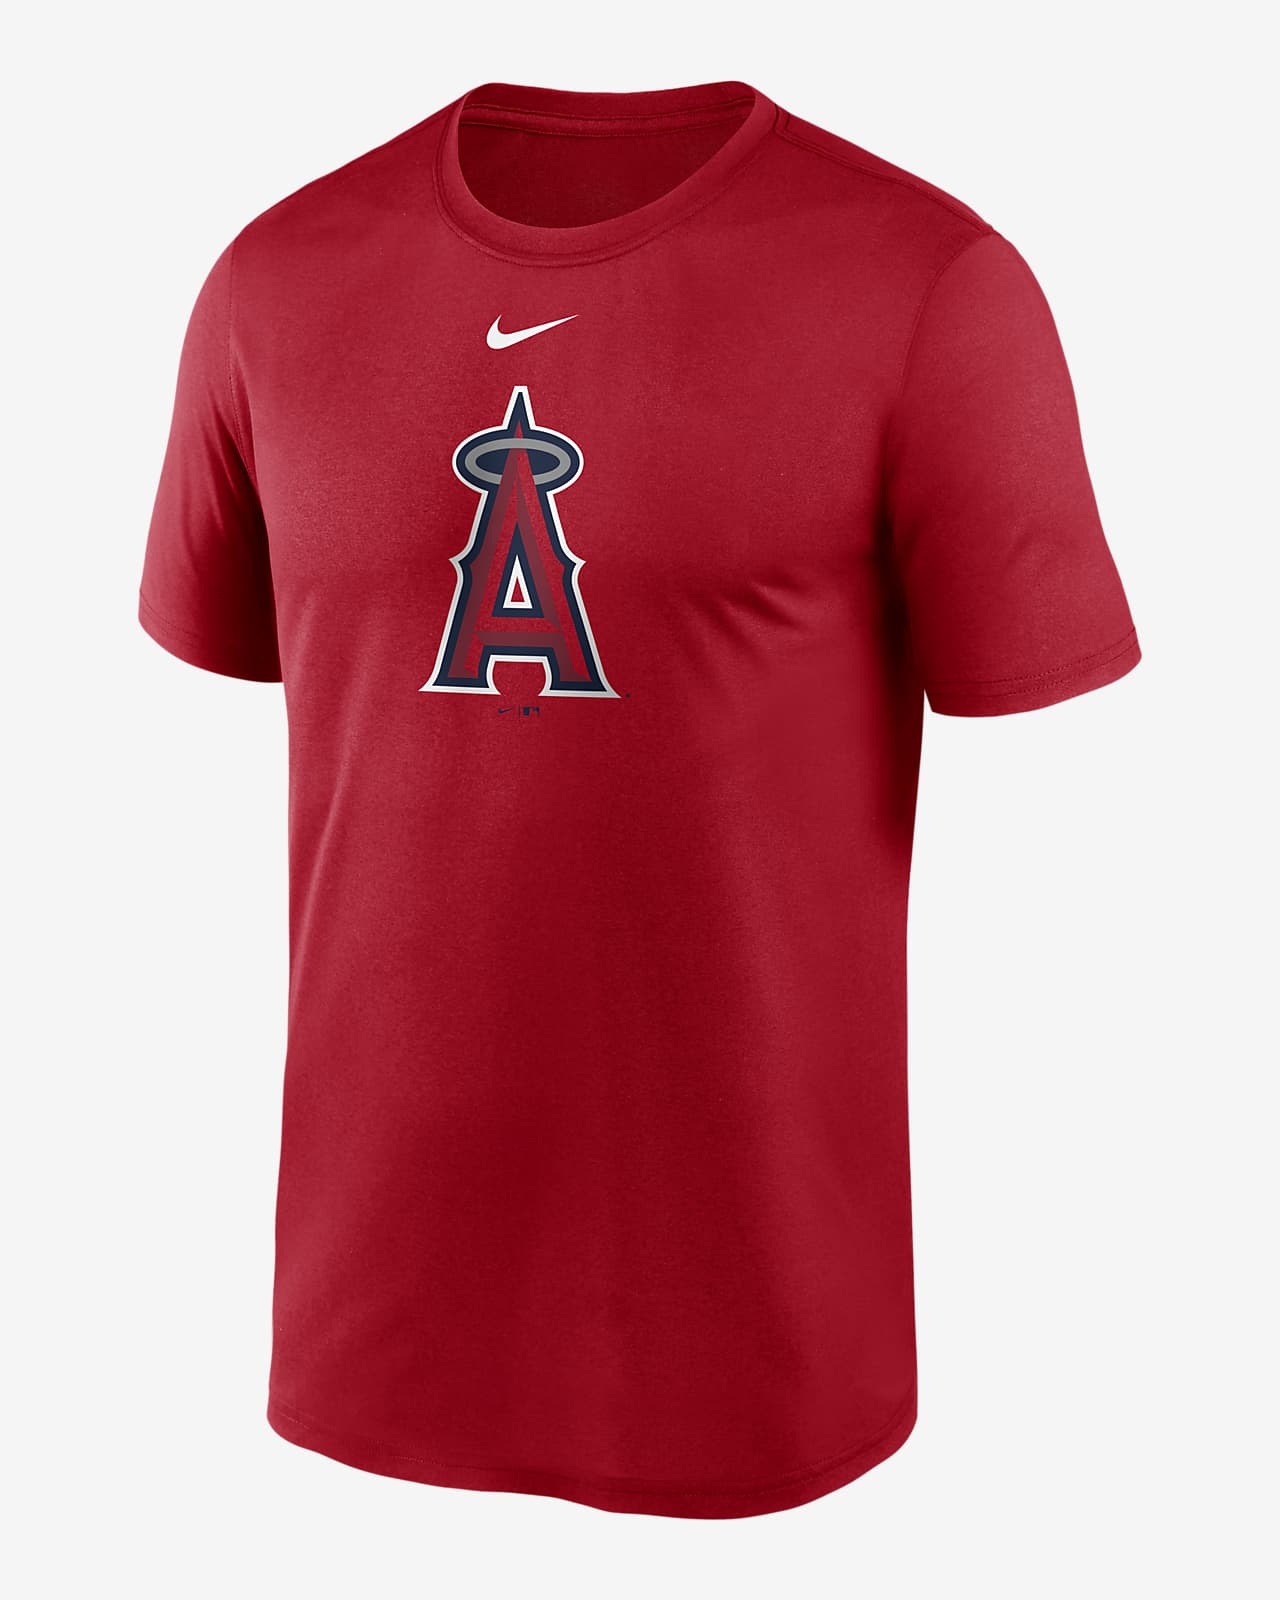 Nike Dri-FIT Logo Legend (MLB Tampa Bay Rays) Men's T-Shirt.